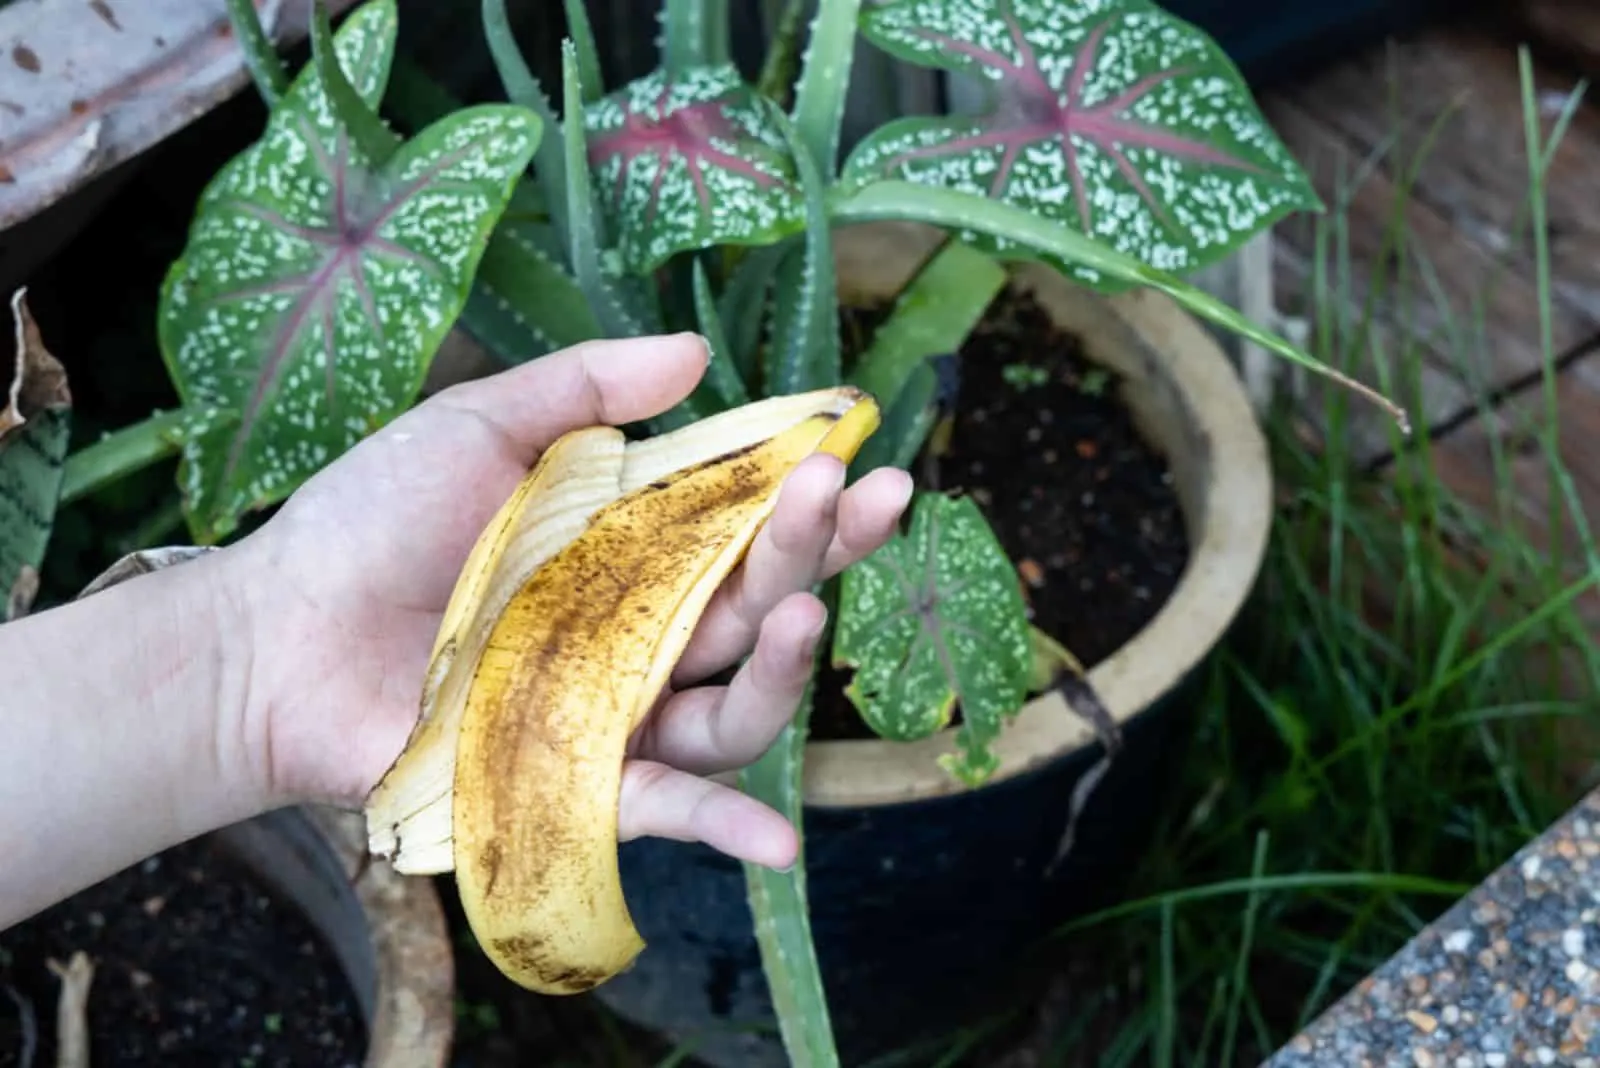 Hand holding banana peel against garden with lush plants